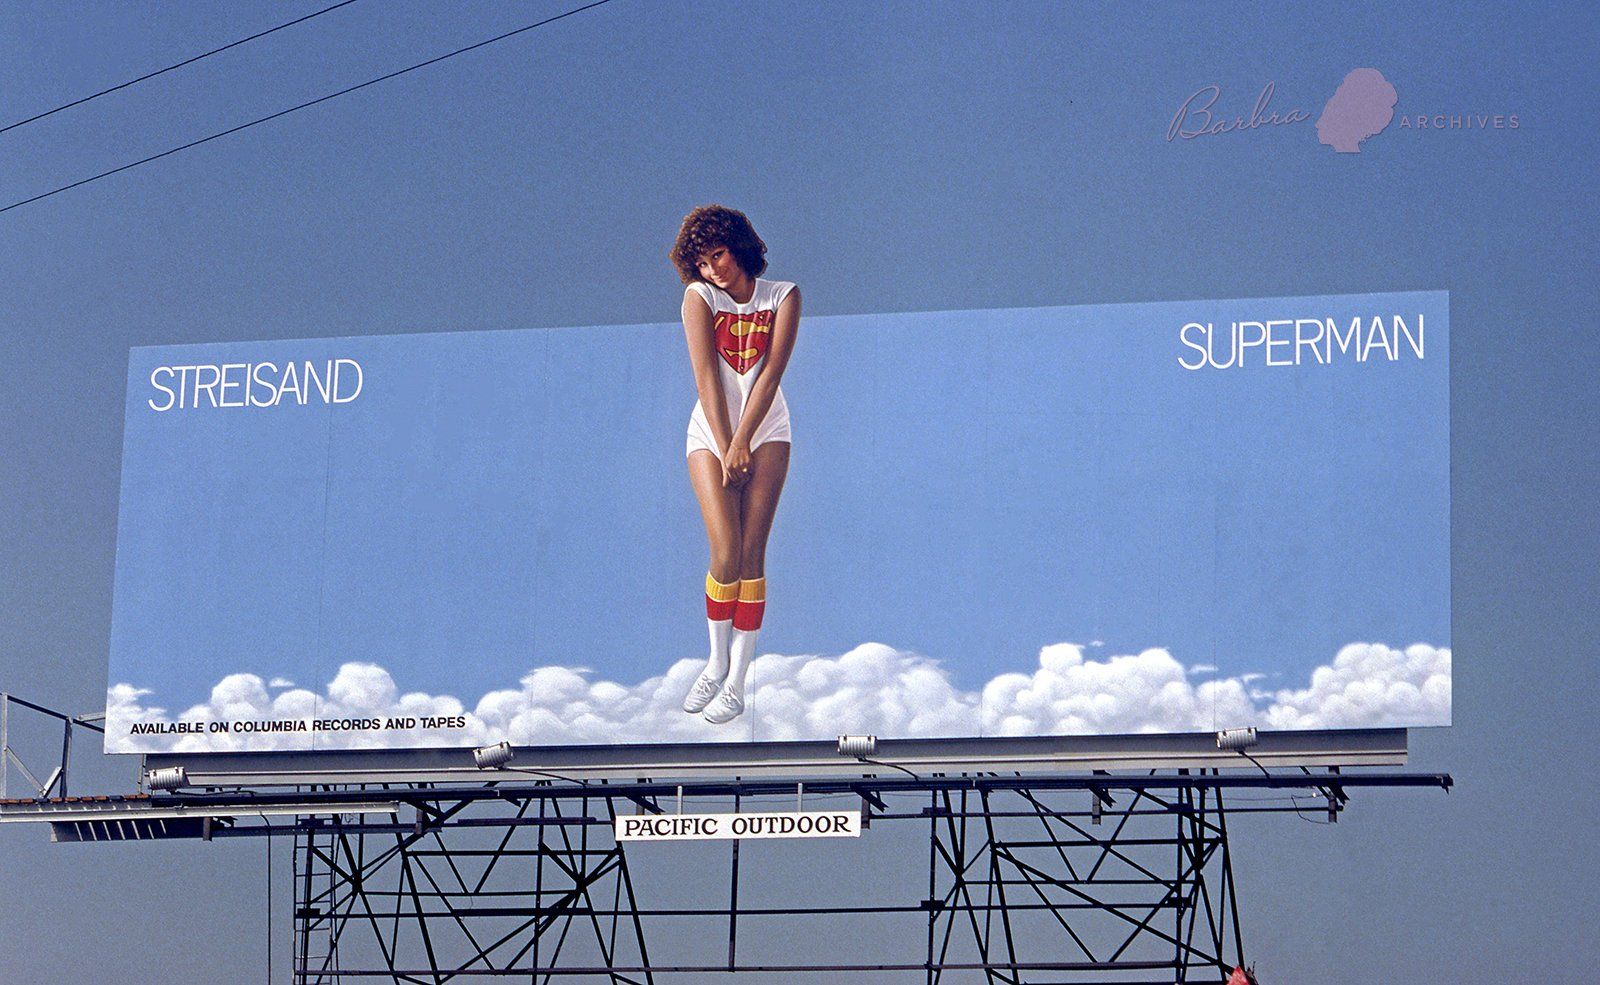 A billboard on the Sunset Strip in L.A. advertising Streisand's Superman album. Photo by: Robert Landau